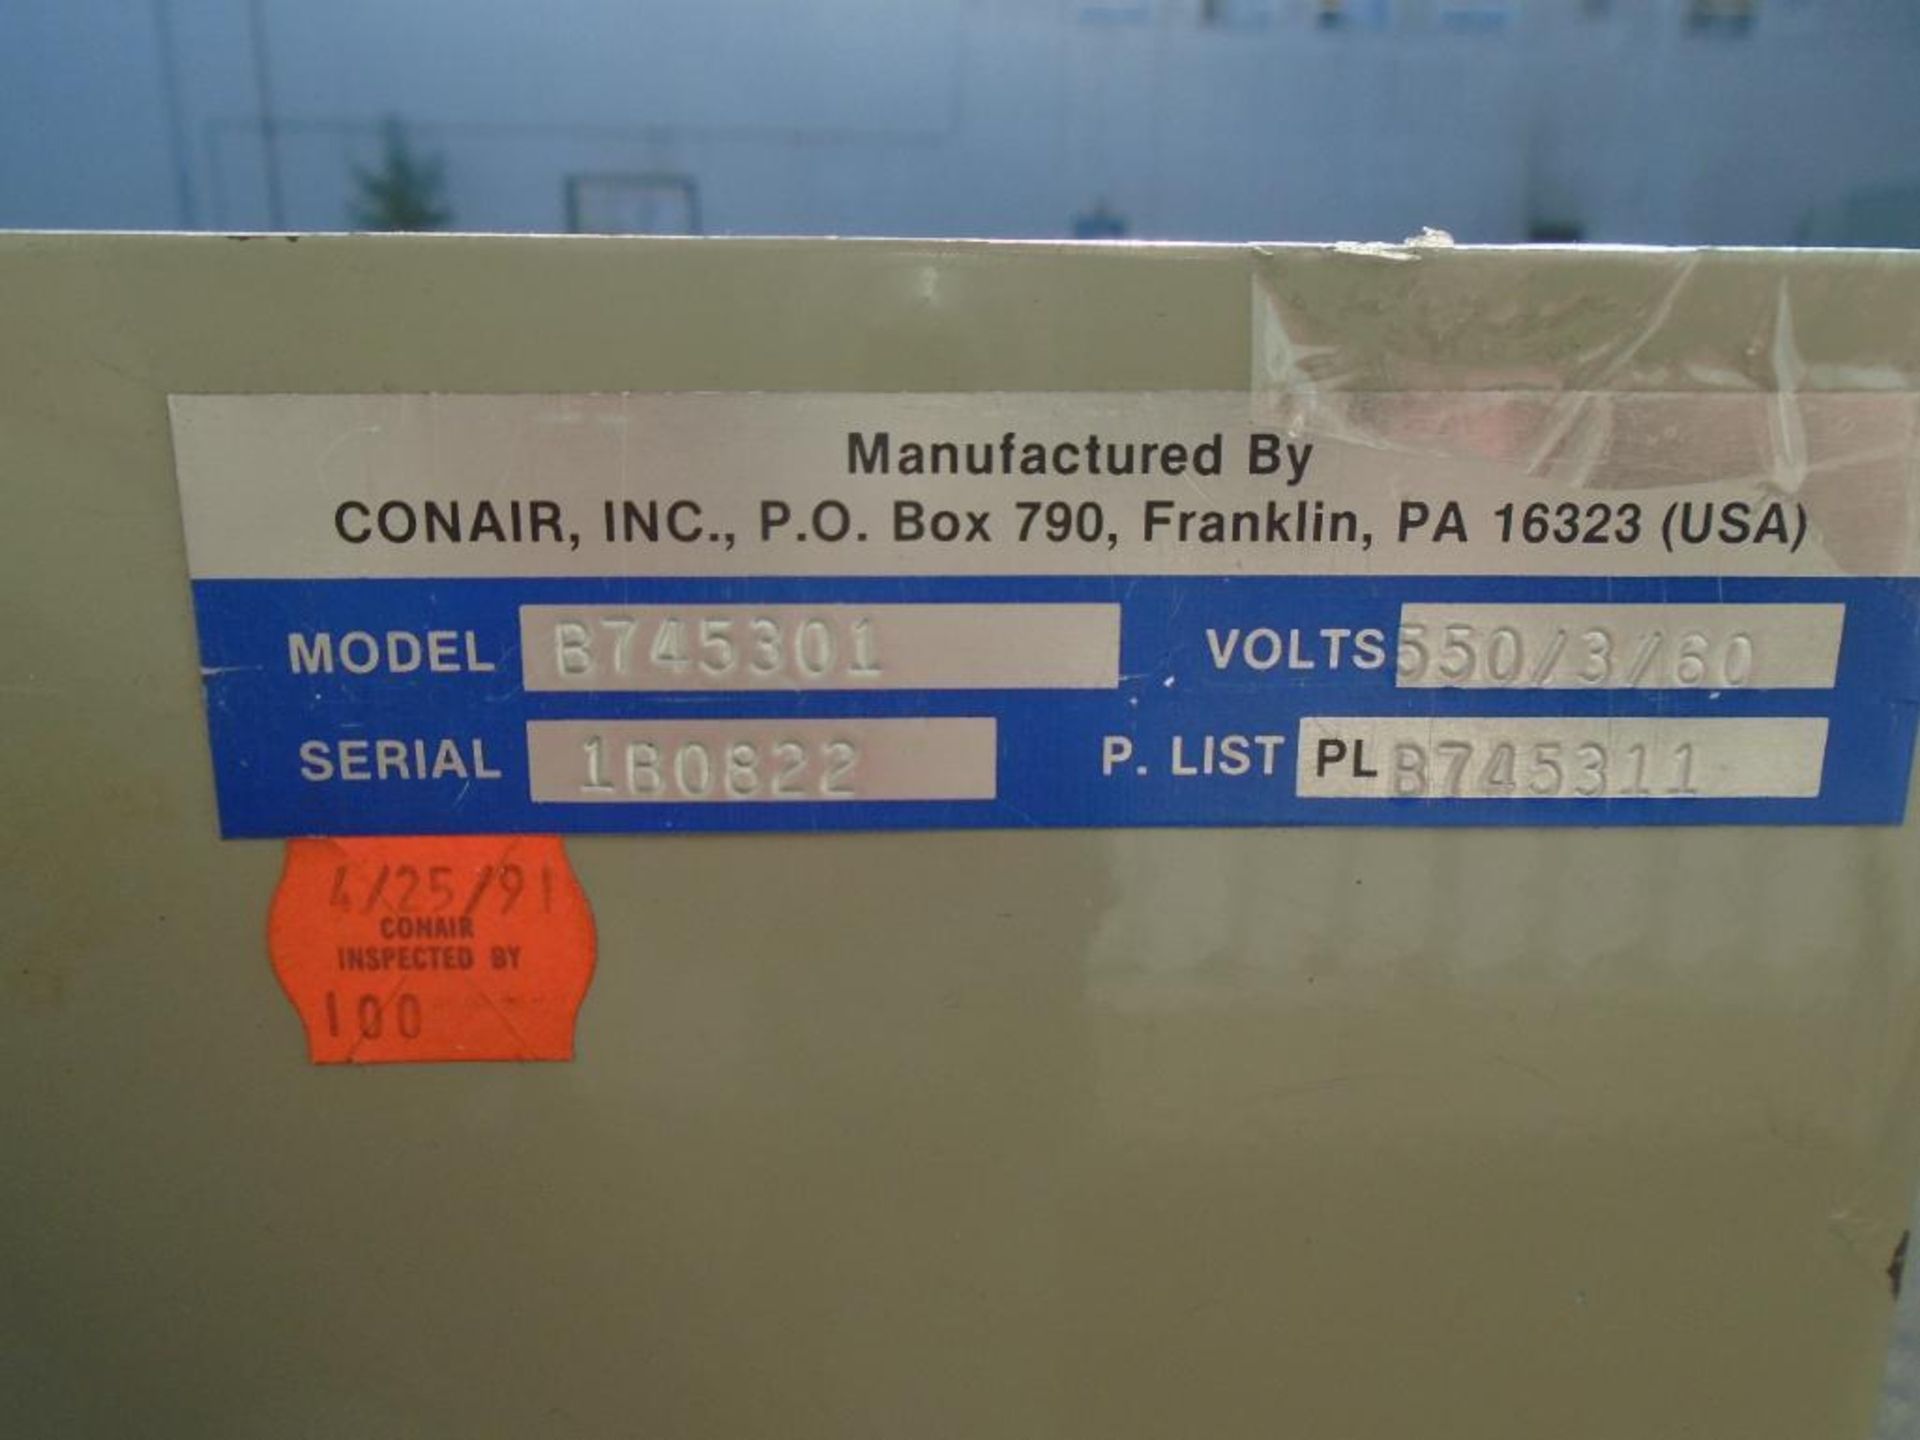 Conair Franklin Loader Control 575V 3HP M/N B745301 - Image 4 of 4